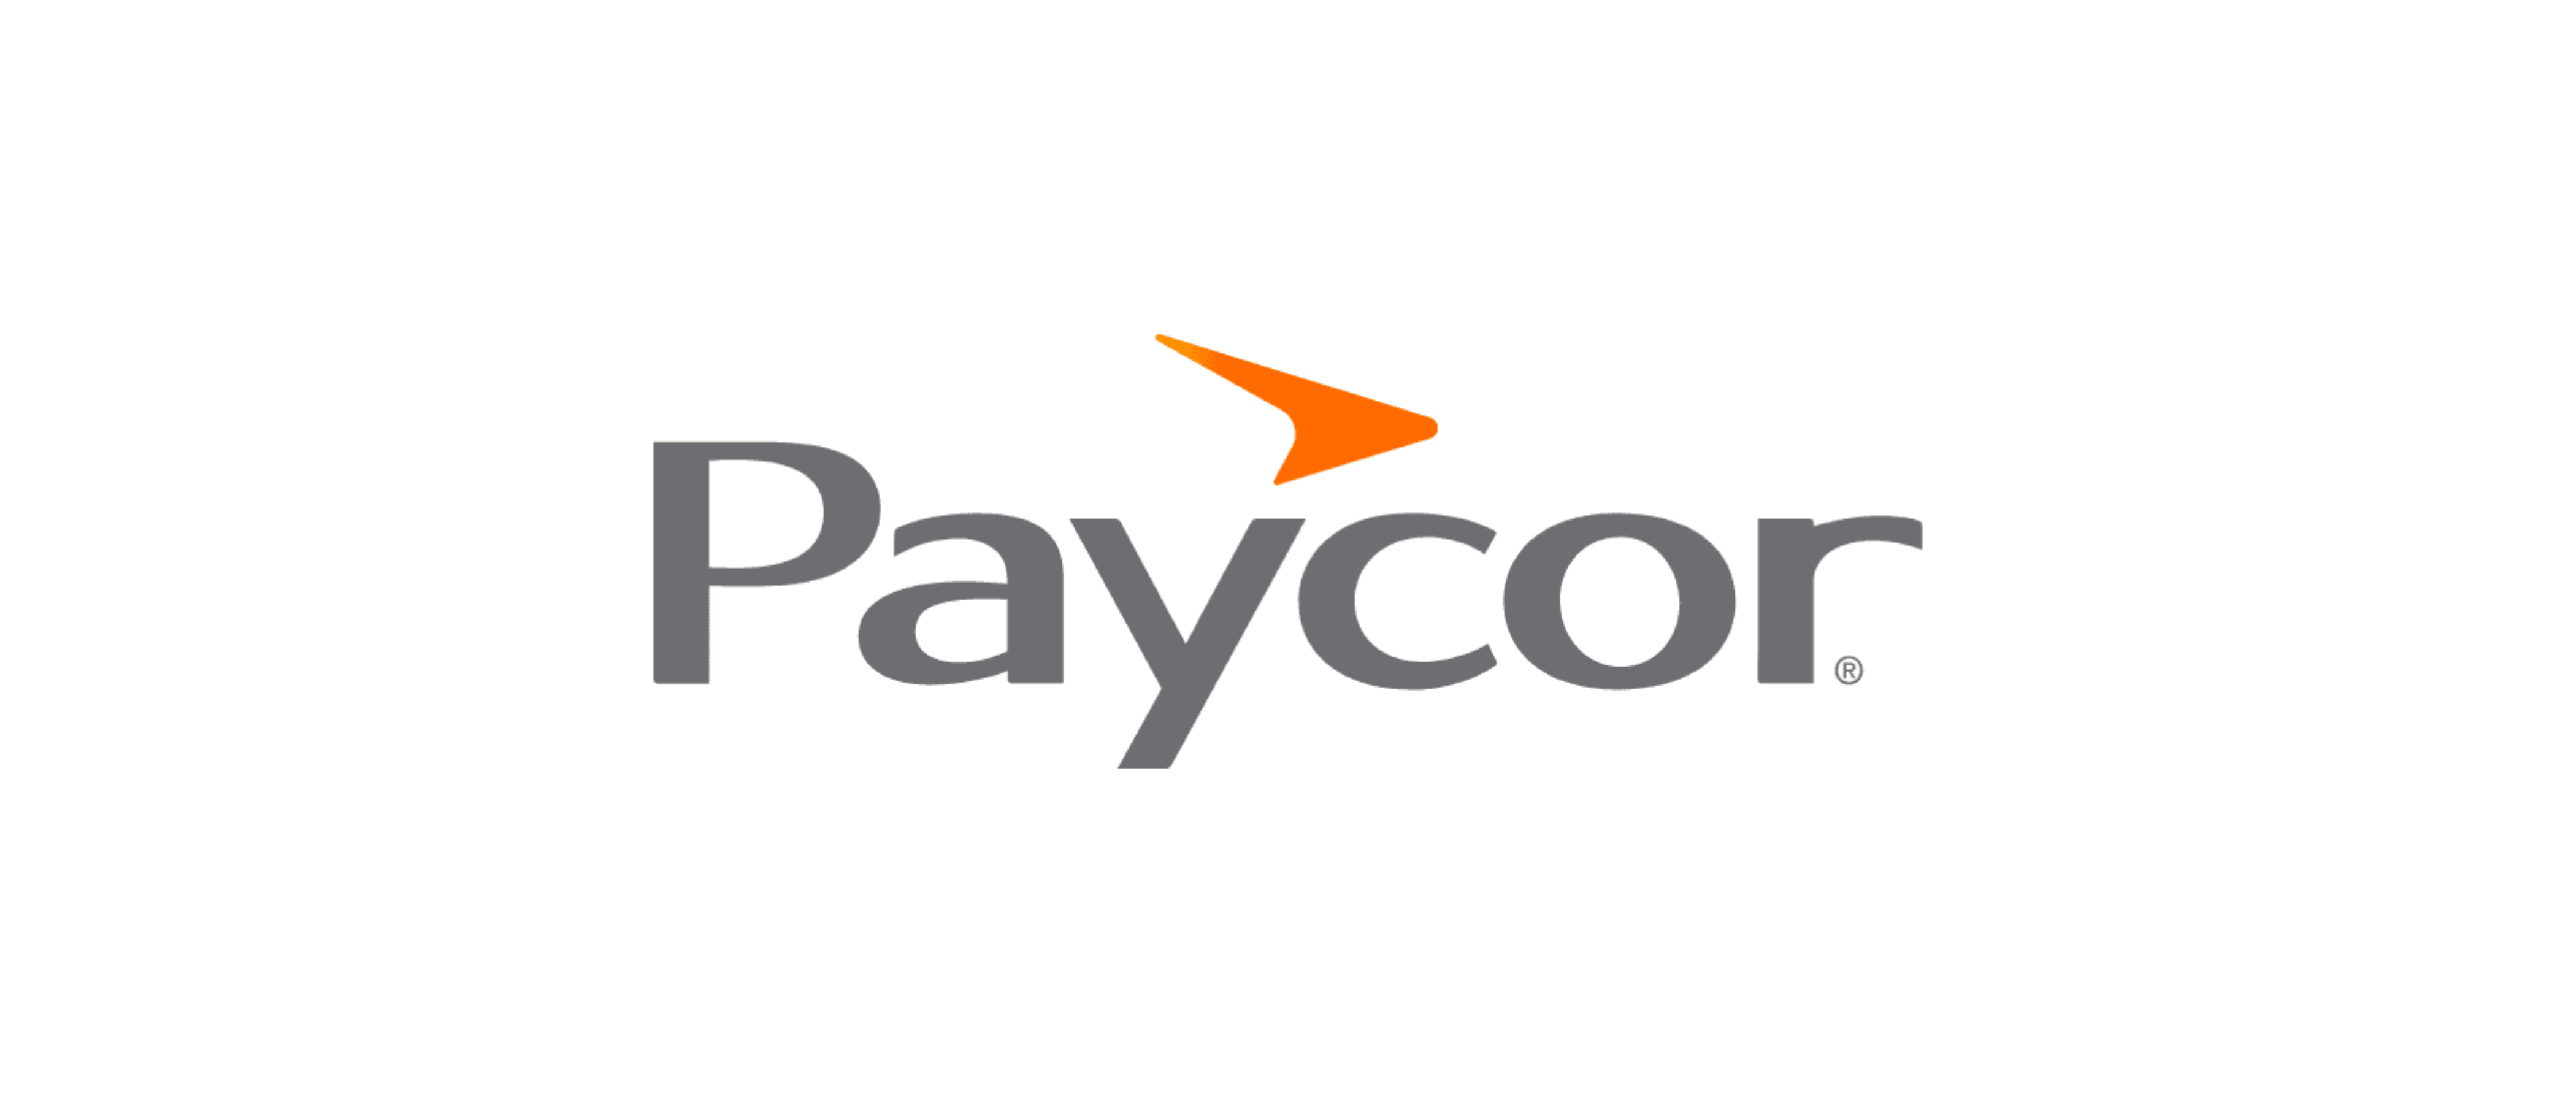 Paycor corporate logo